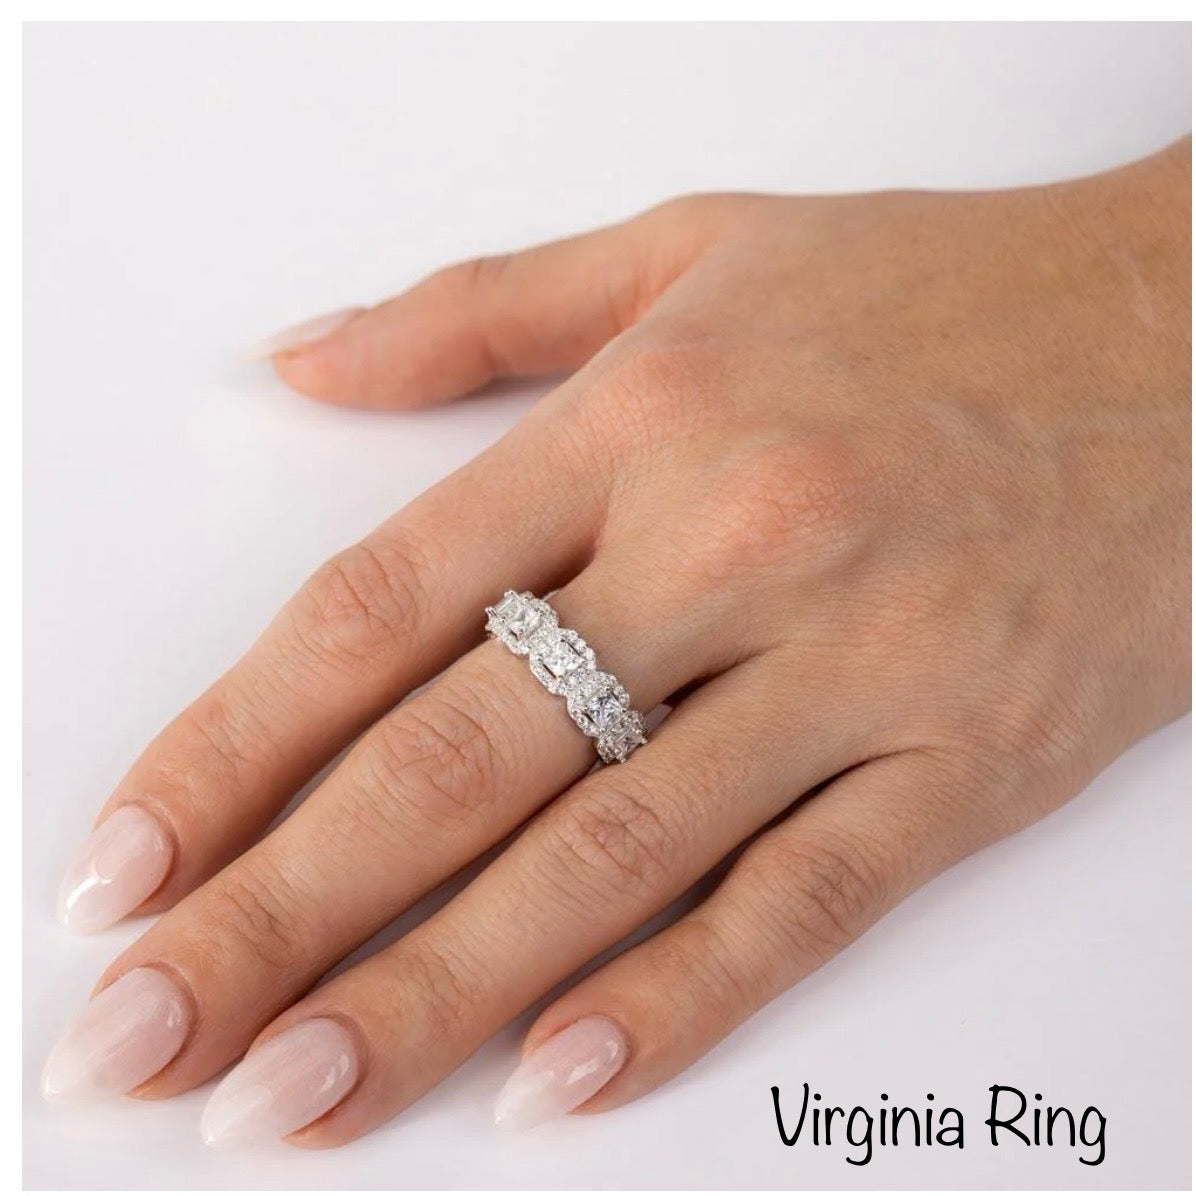 Virginia Ring